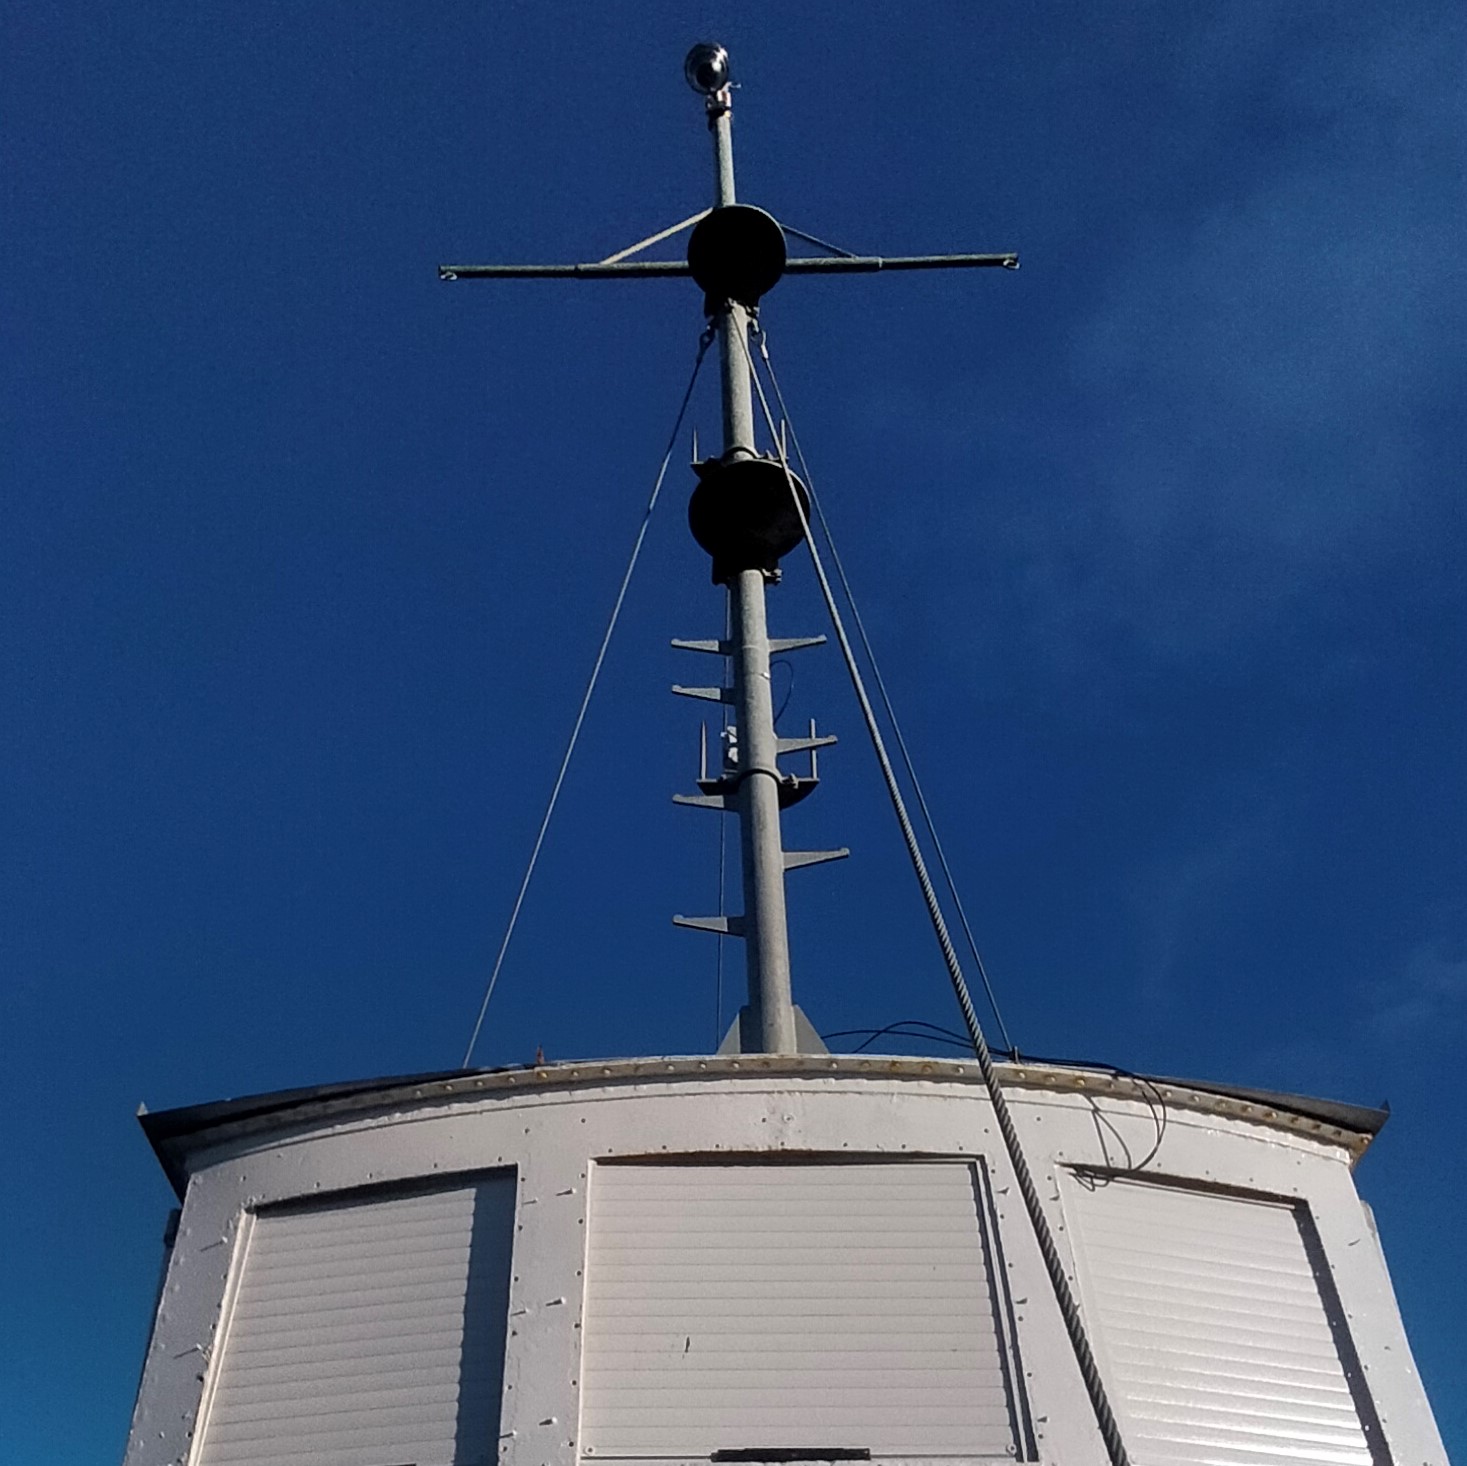 New weatherproof shutters & camera on mast